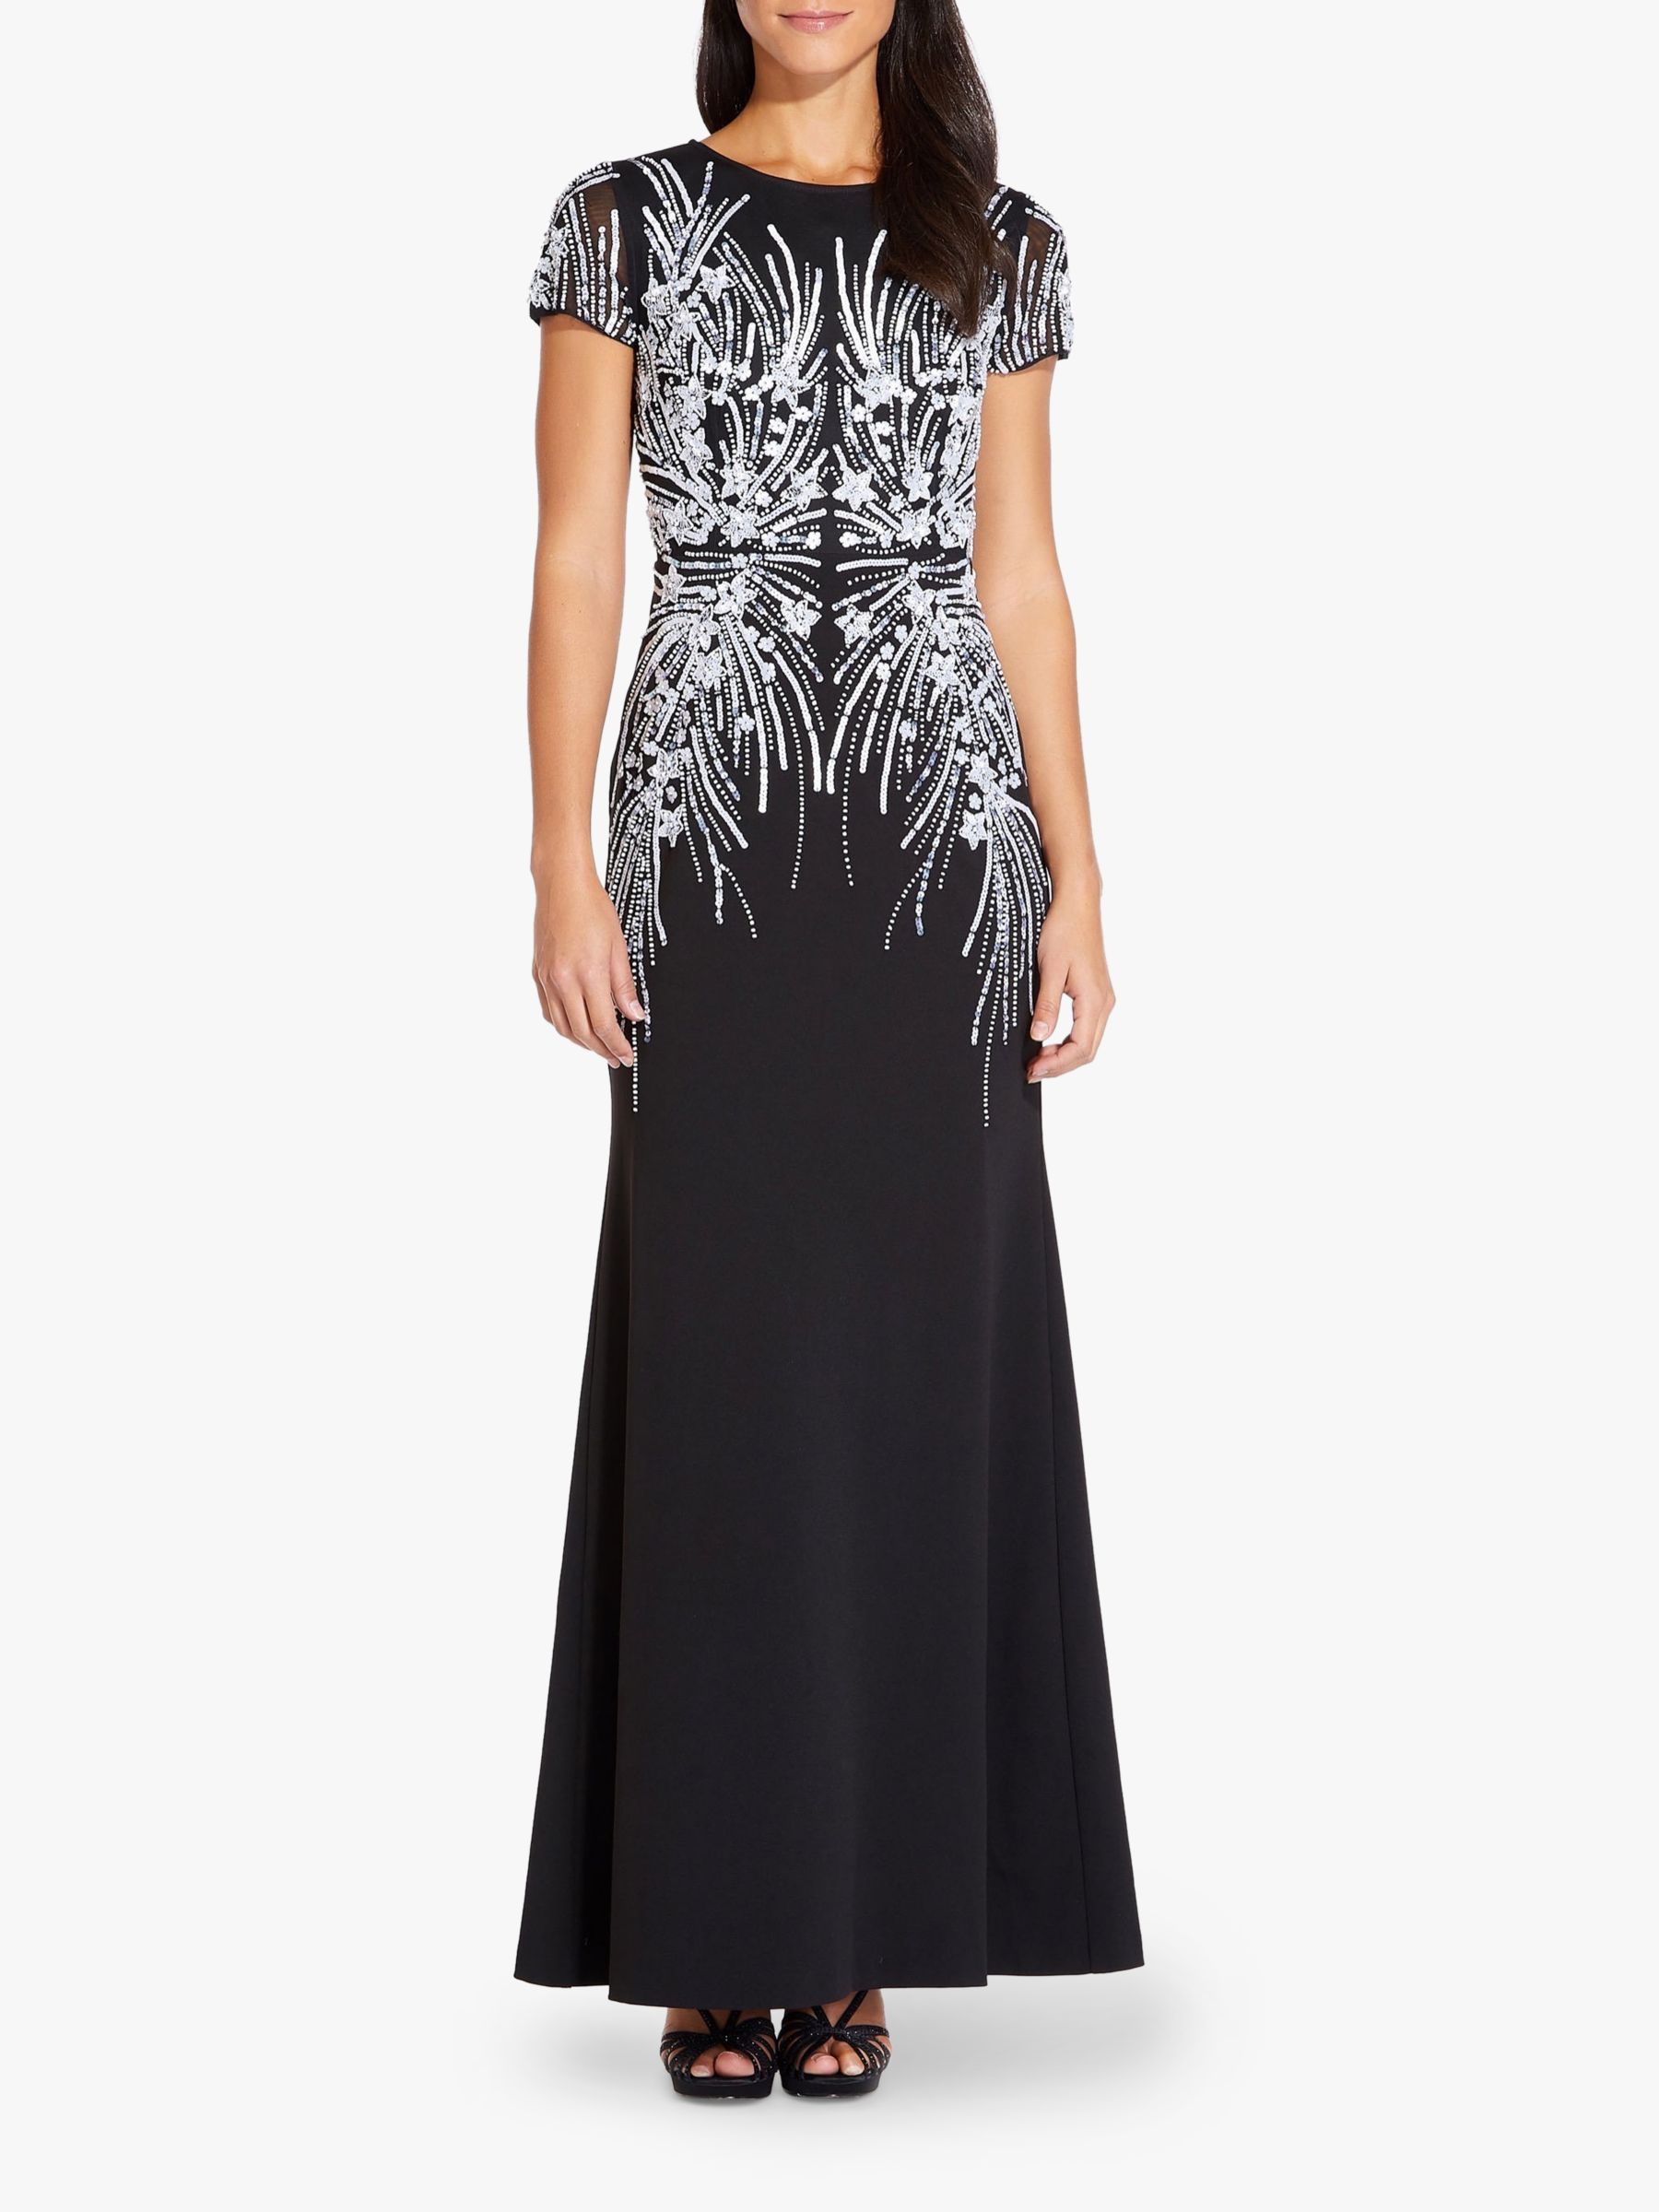 Adrianna Papell Beaded Mermaid Dress, Black/Ivory